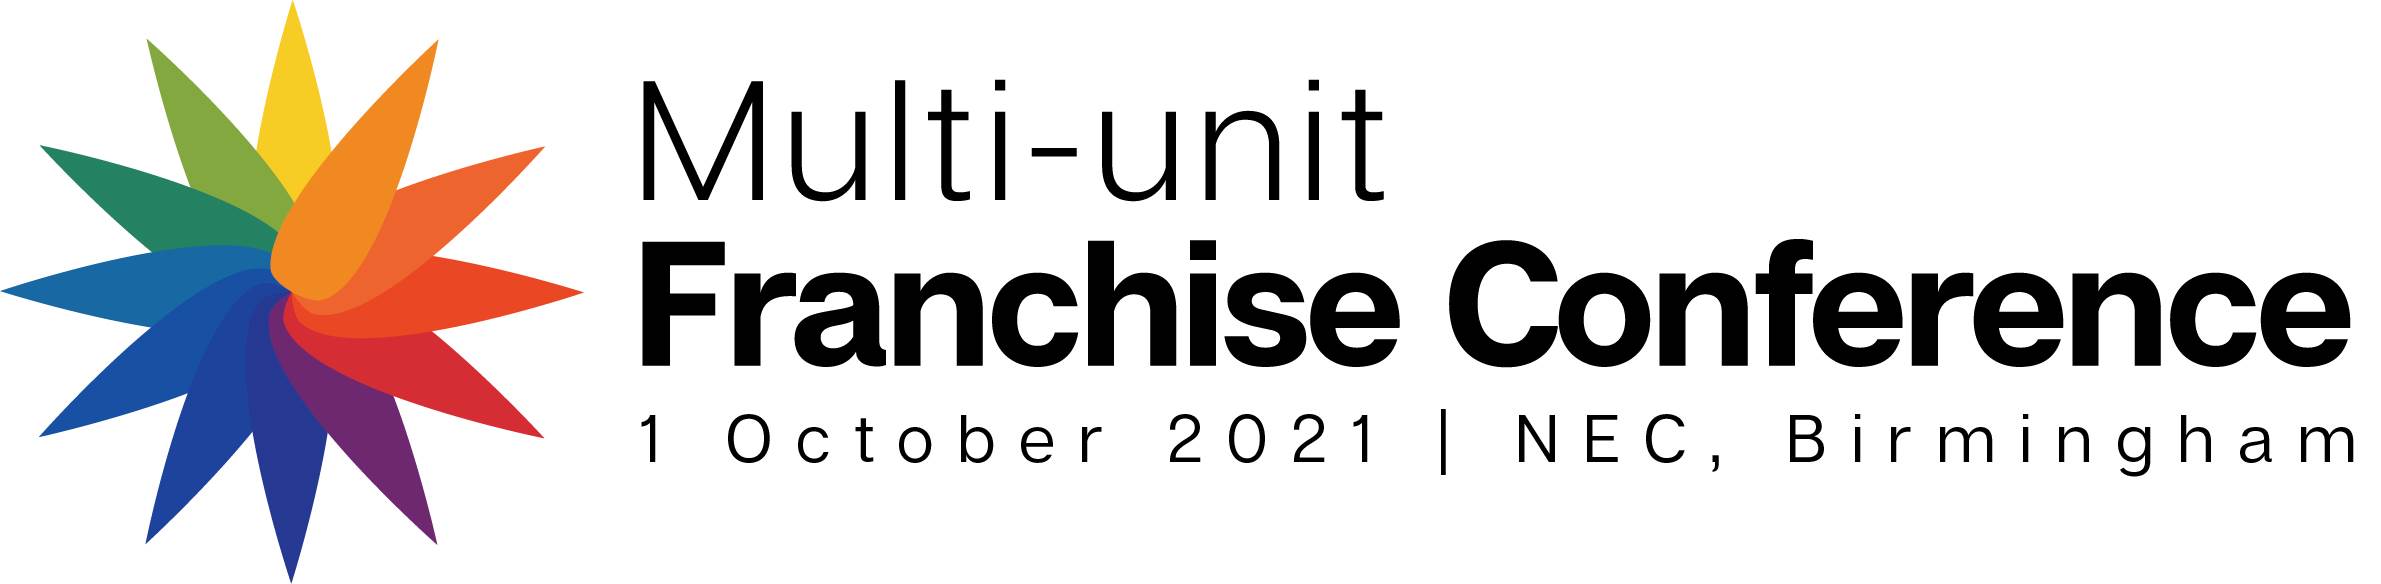 Multi-unit Franchise Conference 2021